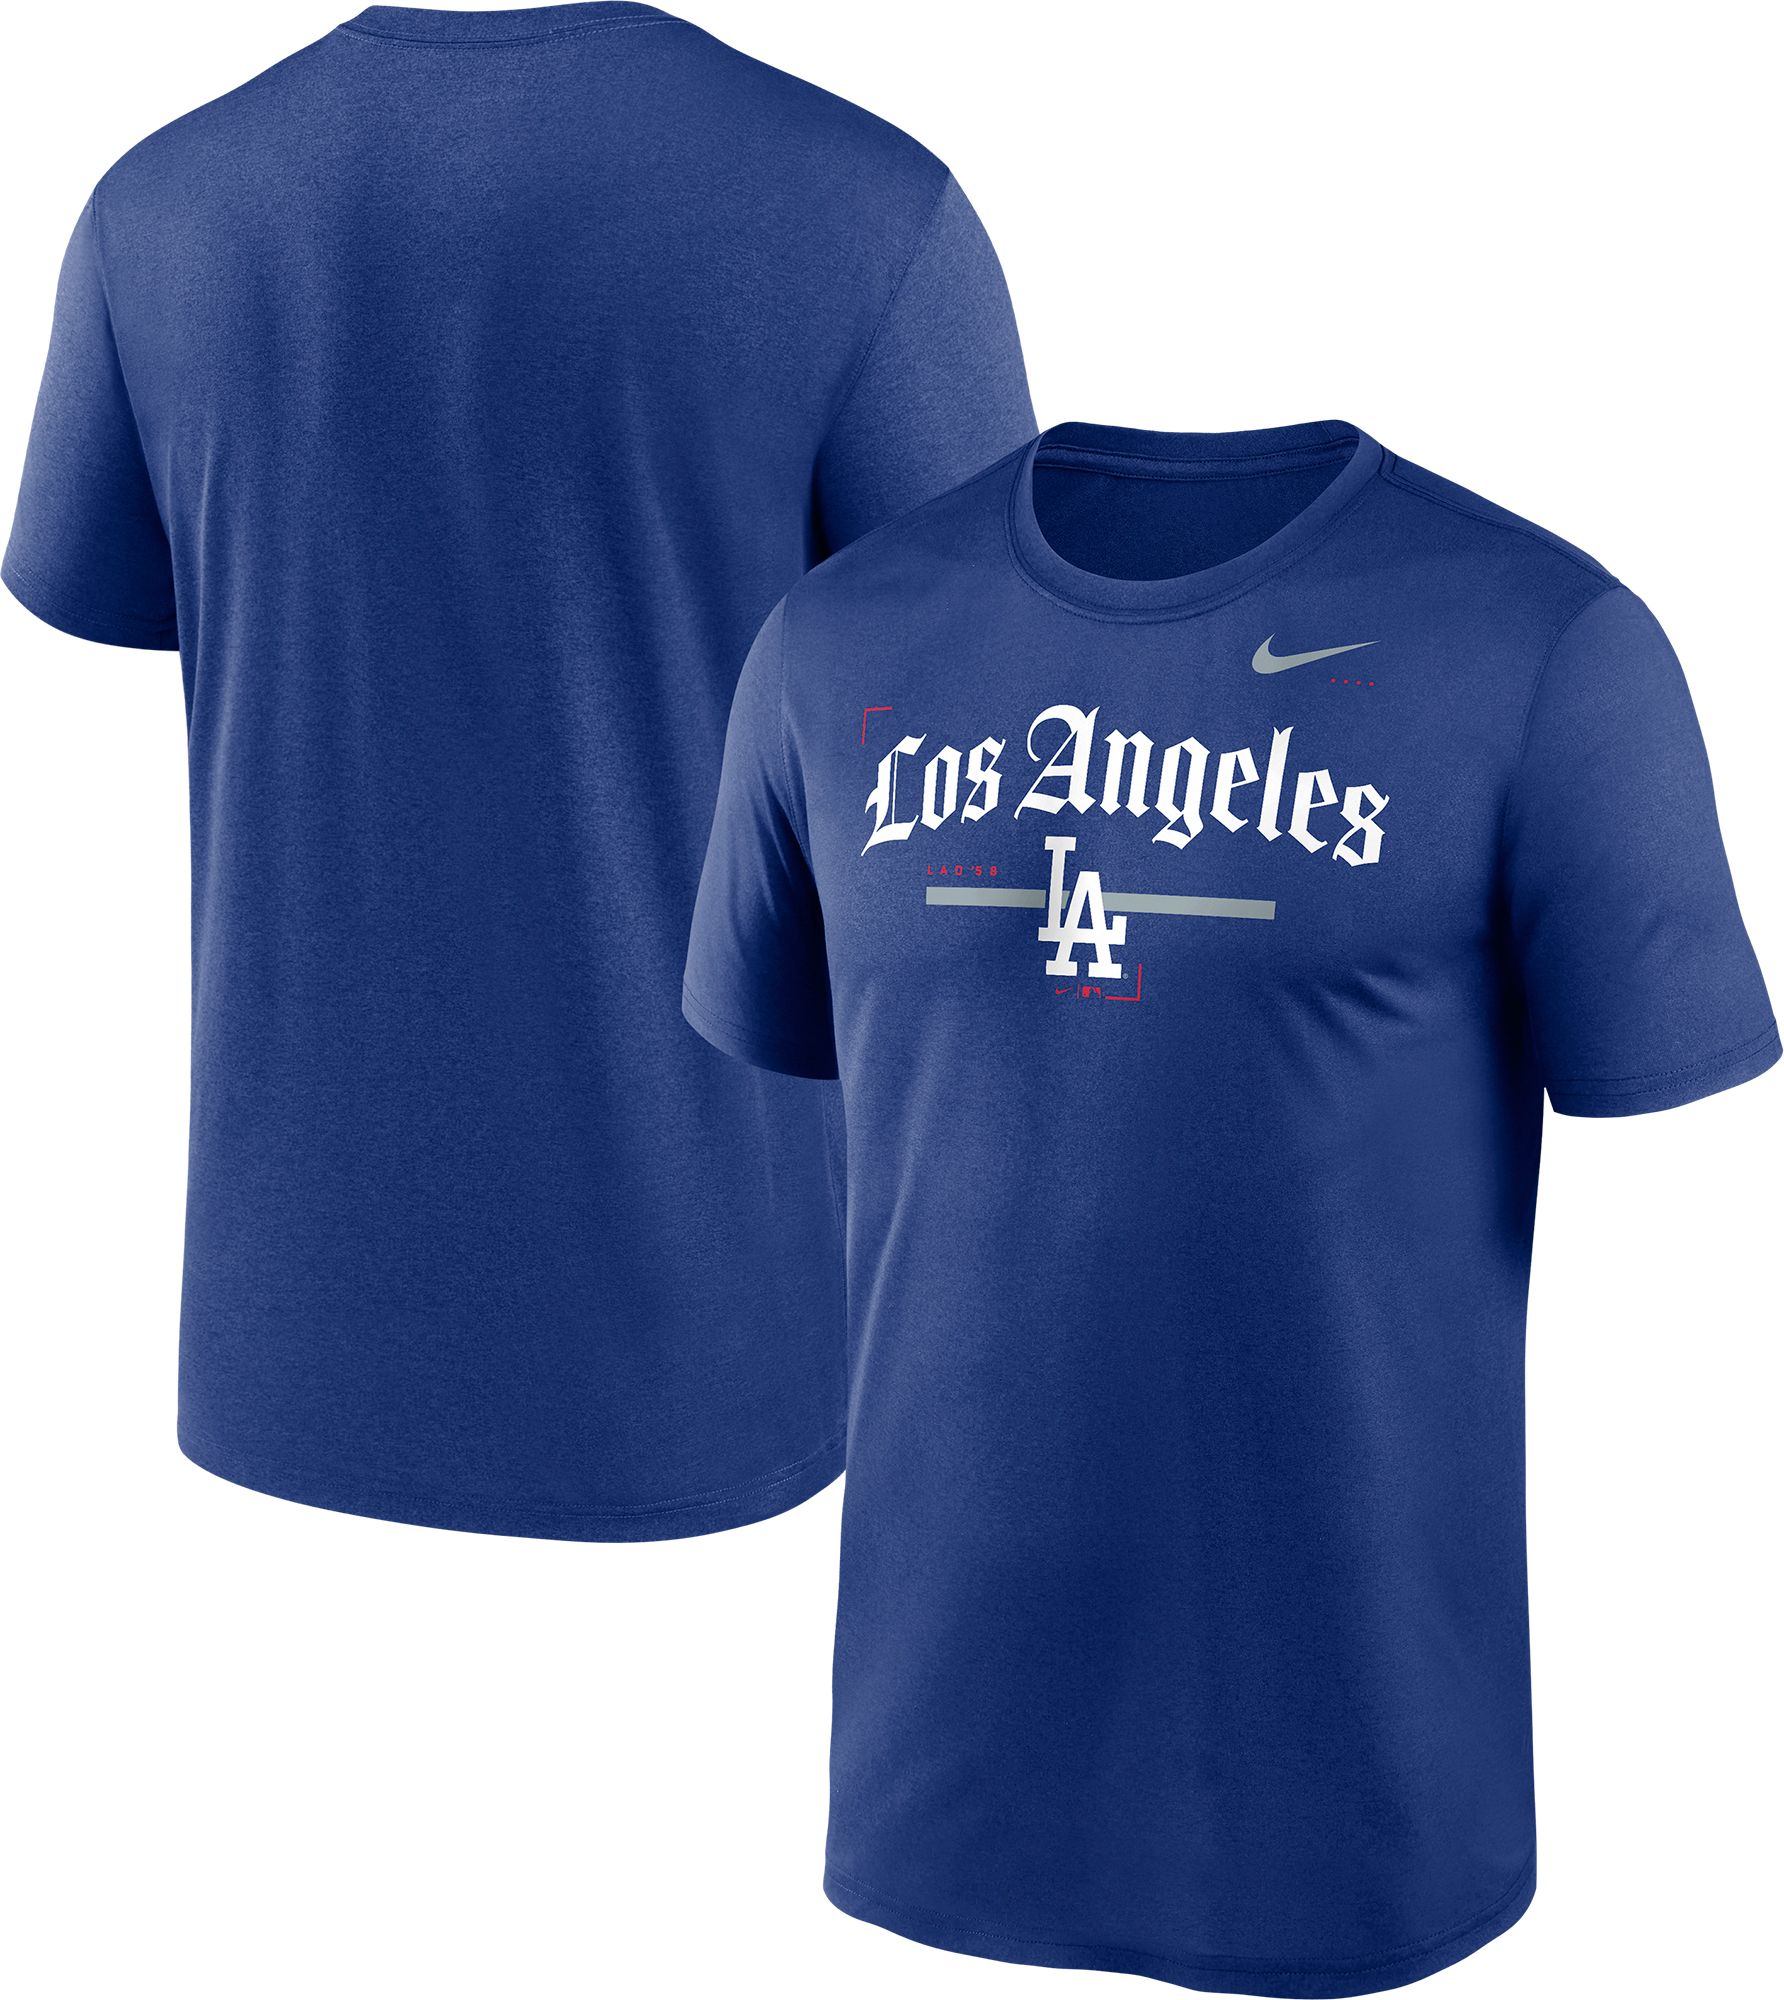 Los Angeles Dodgers kershaw 22 baseball white jersey clearance XS-3XL SIZE  RANGE